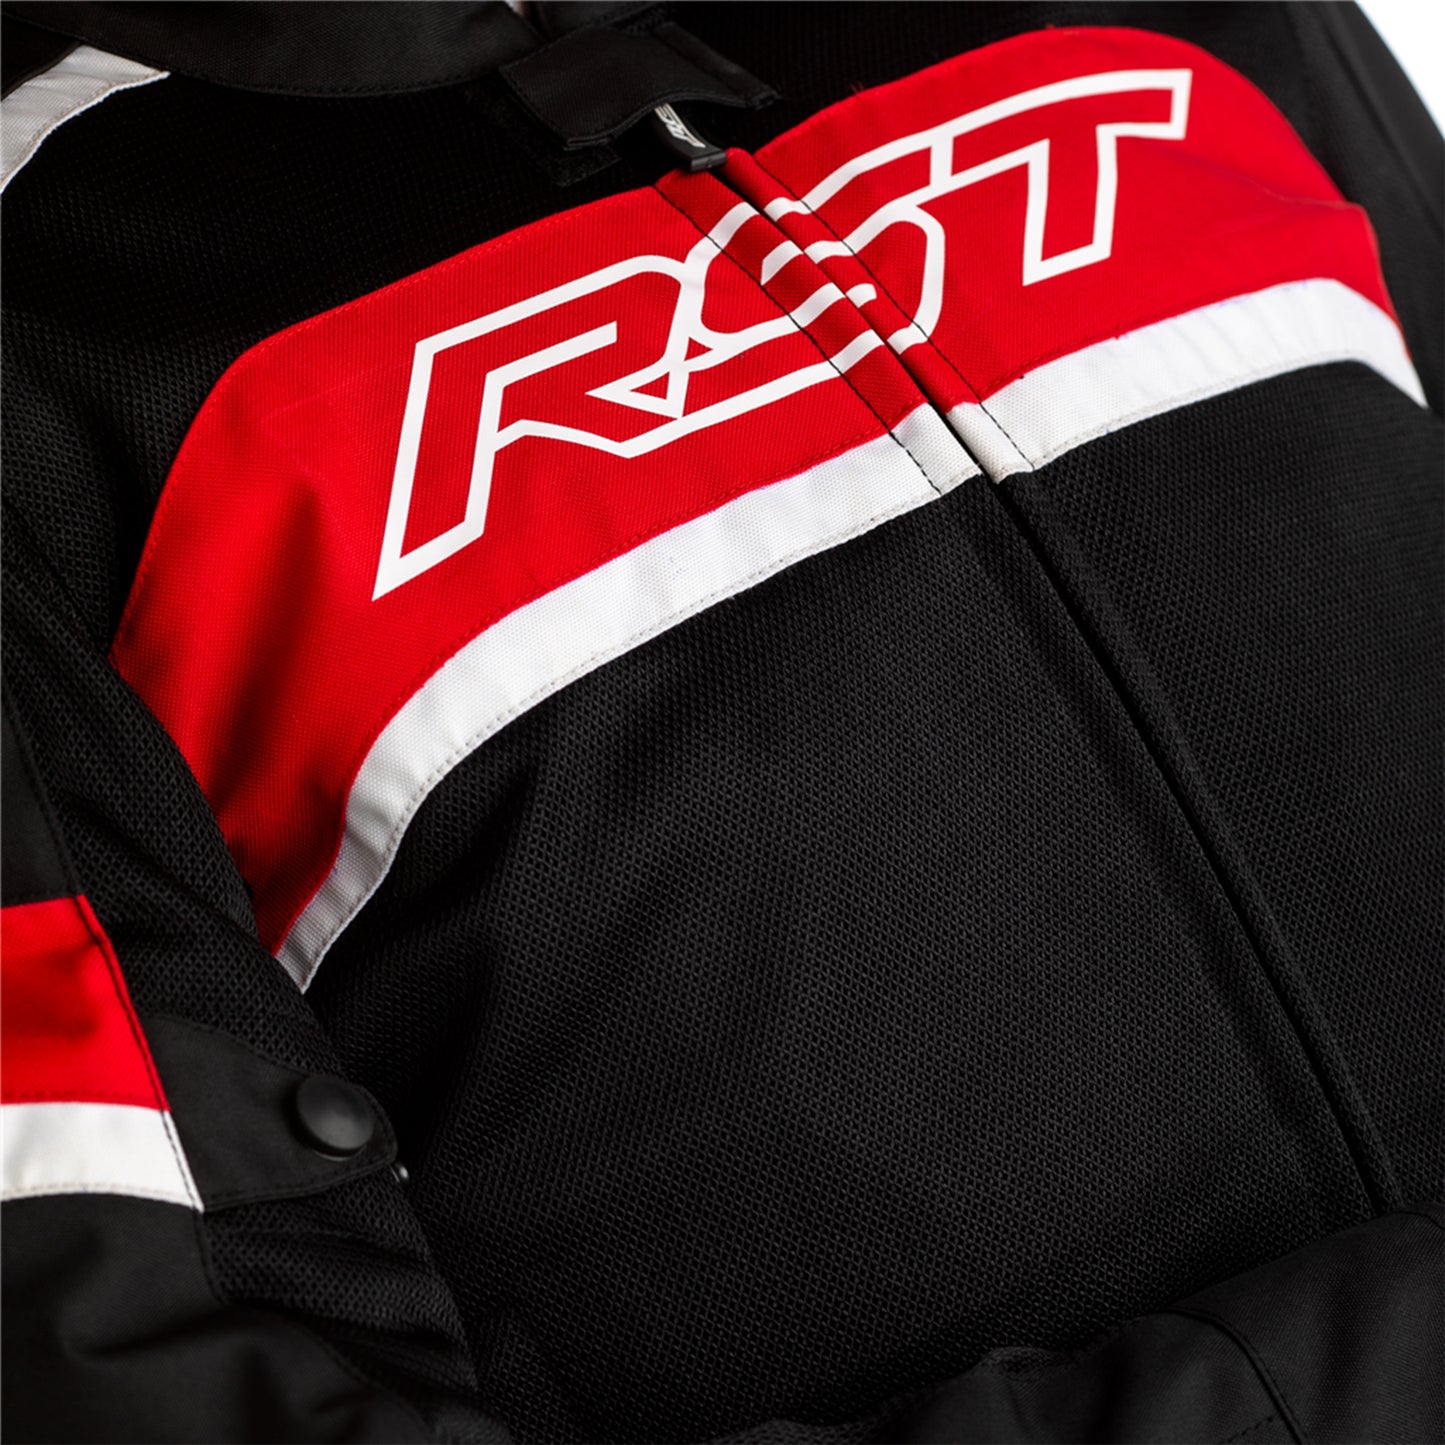 RST Pilot Air CE Men's Waterproof Textile Jacket - Black / Red / White (2408)